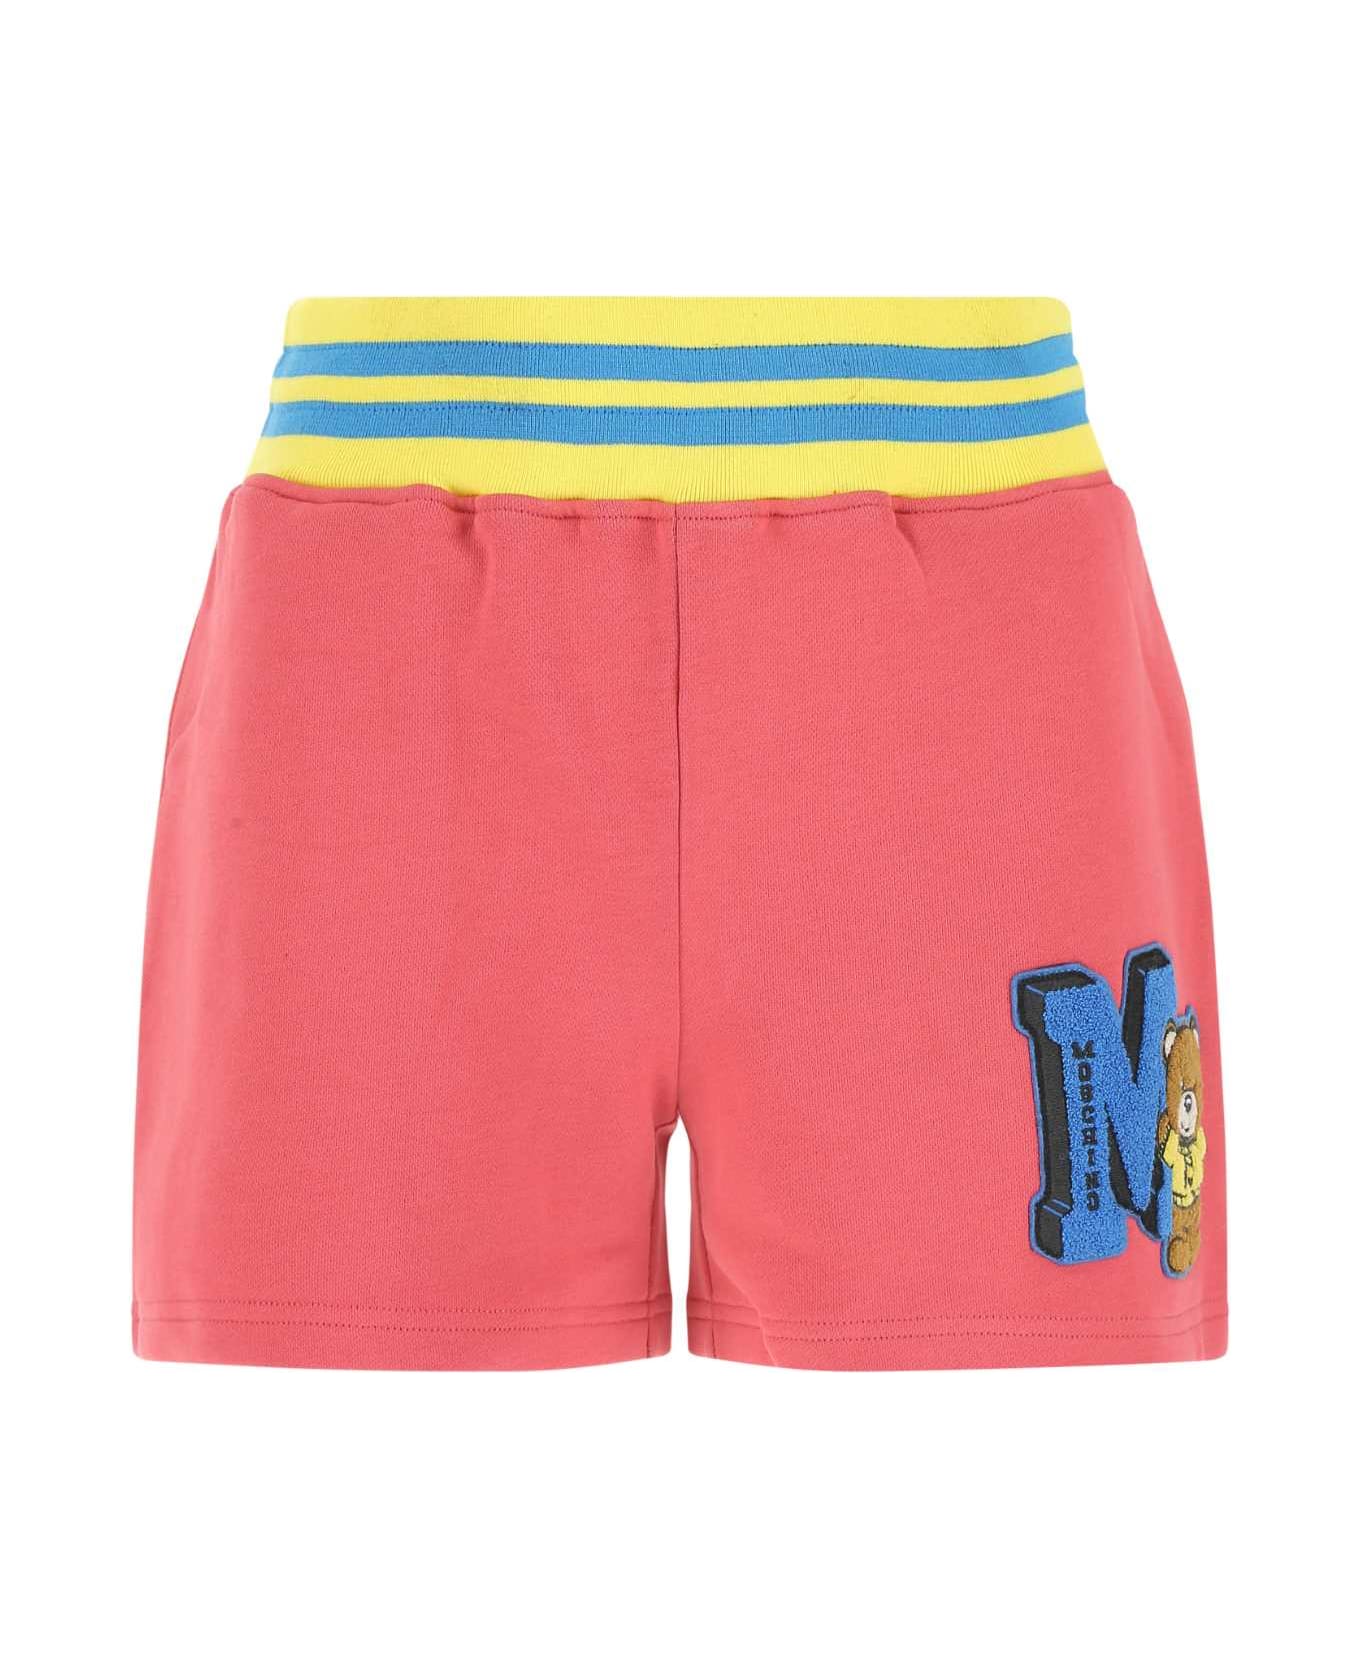 Moschino Pink Cotton Shorts - 1206